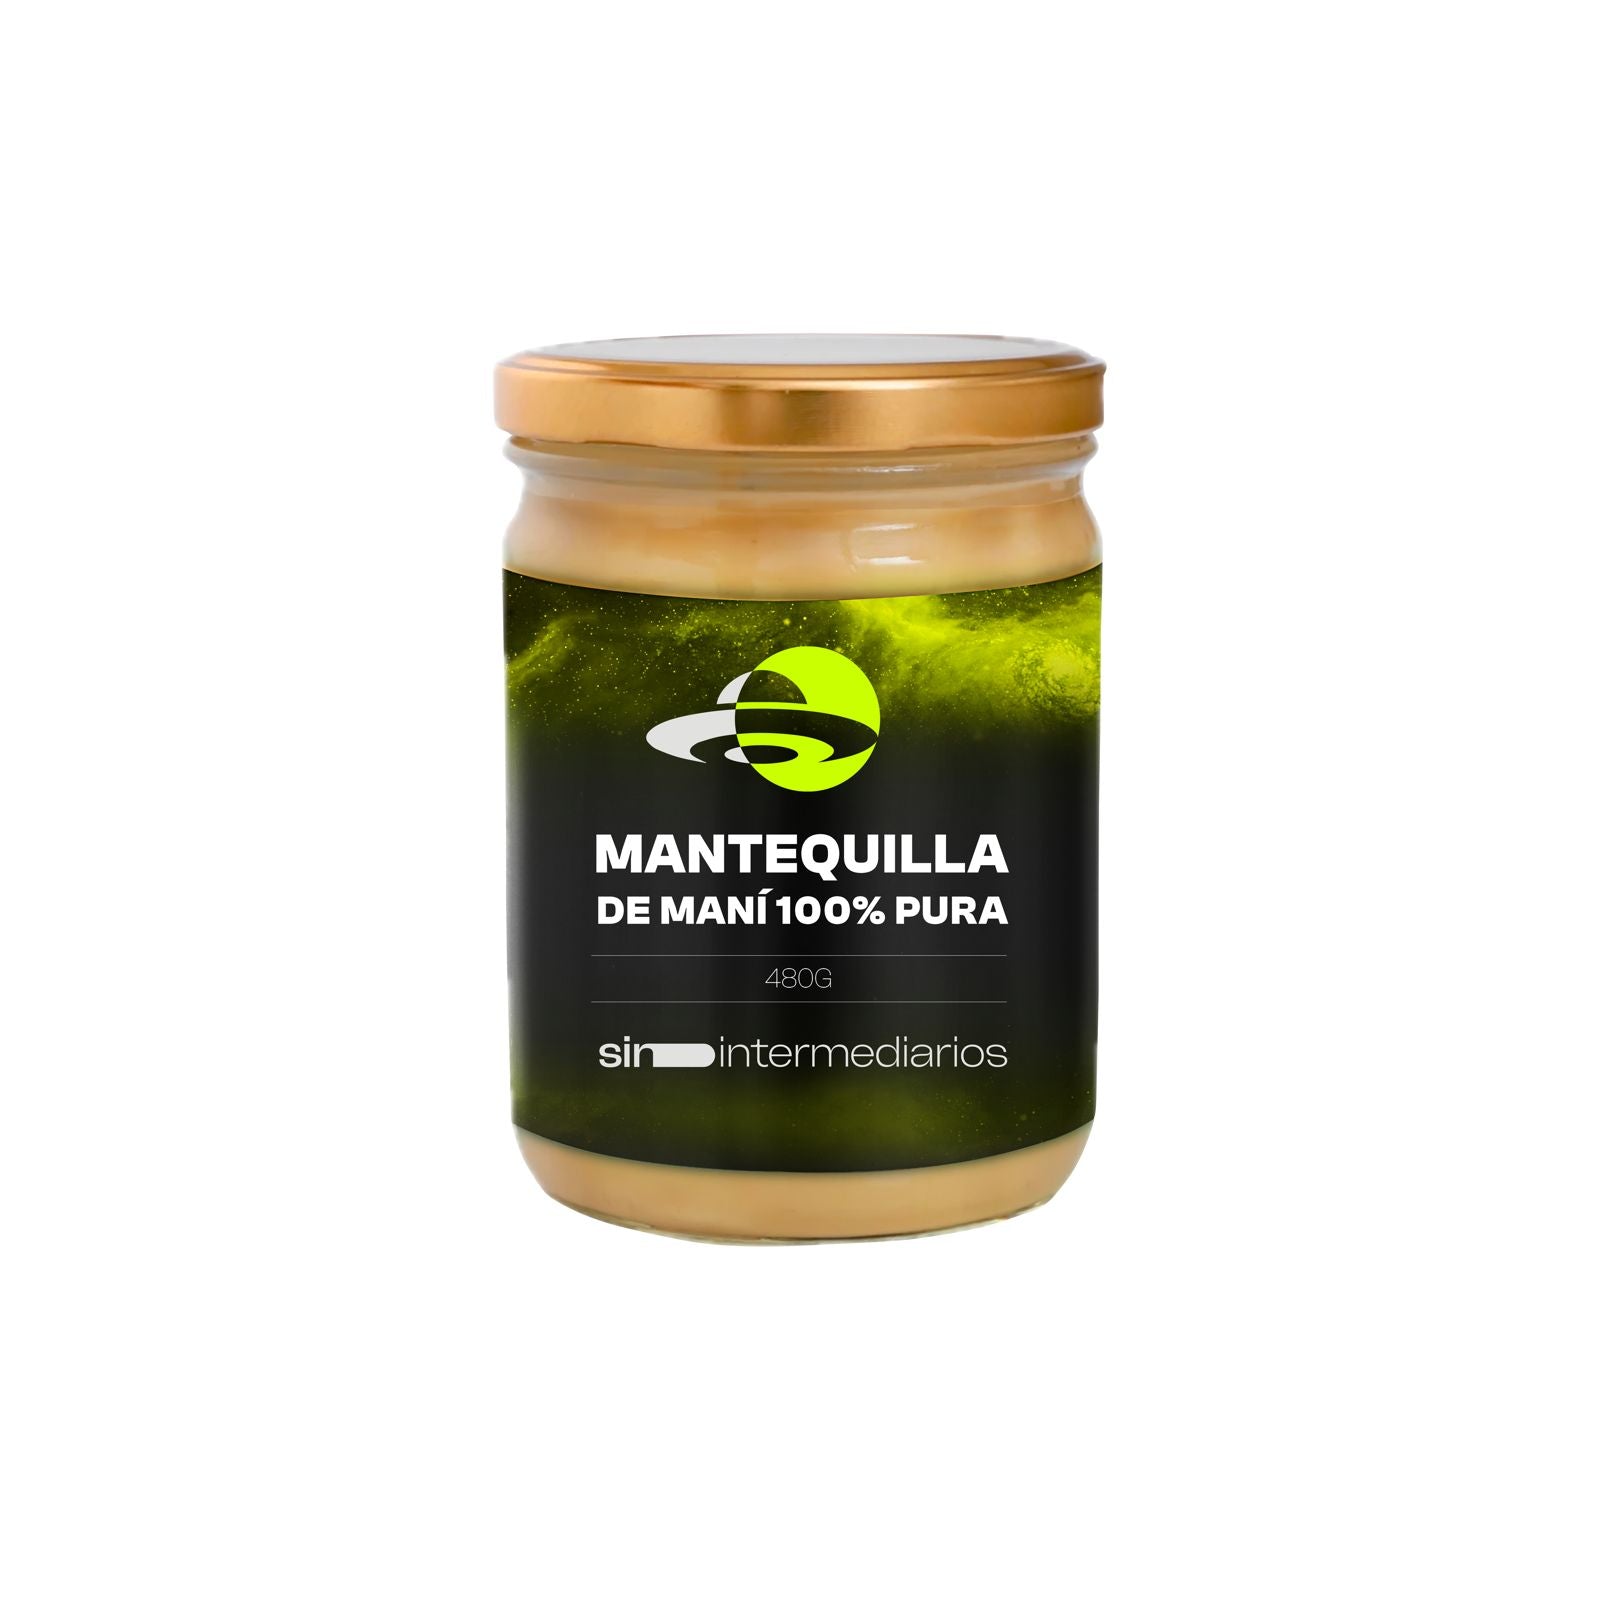 Mantequilla de Maní - 480g